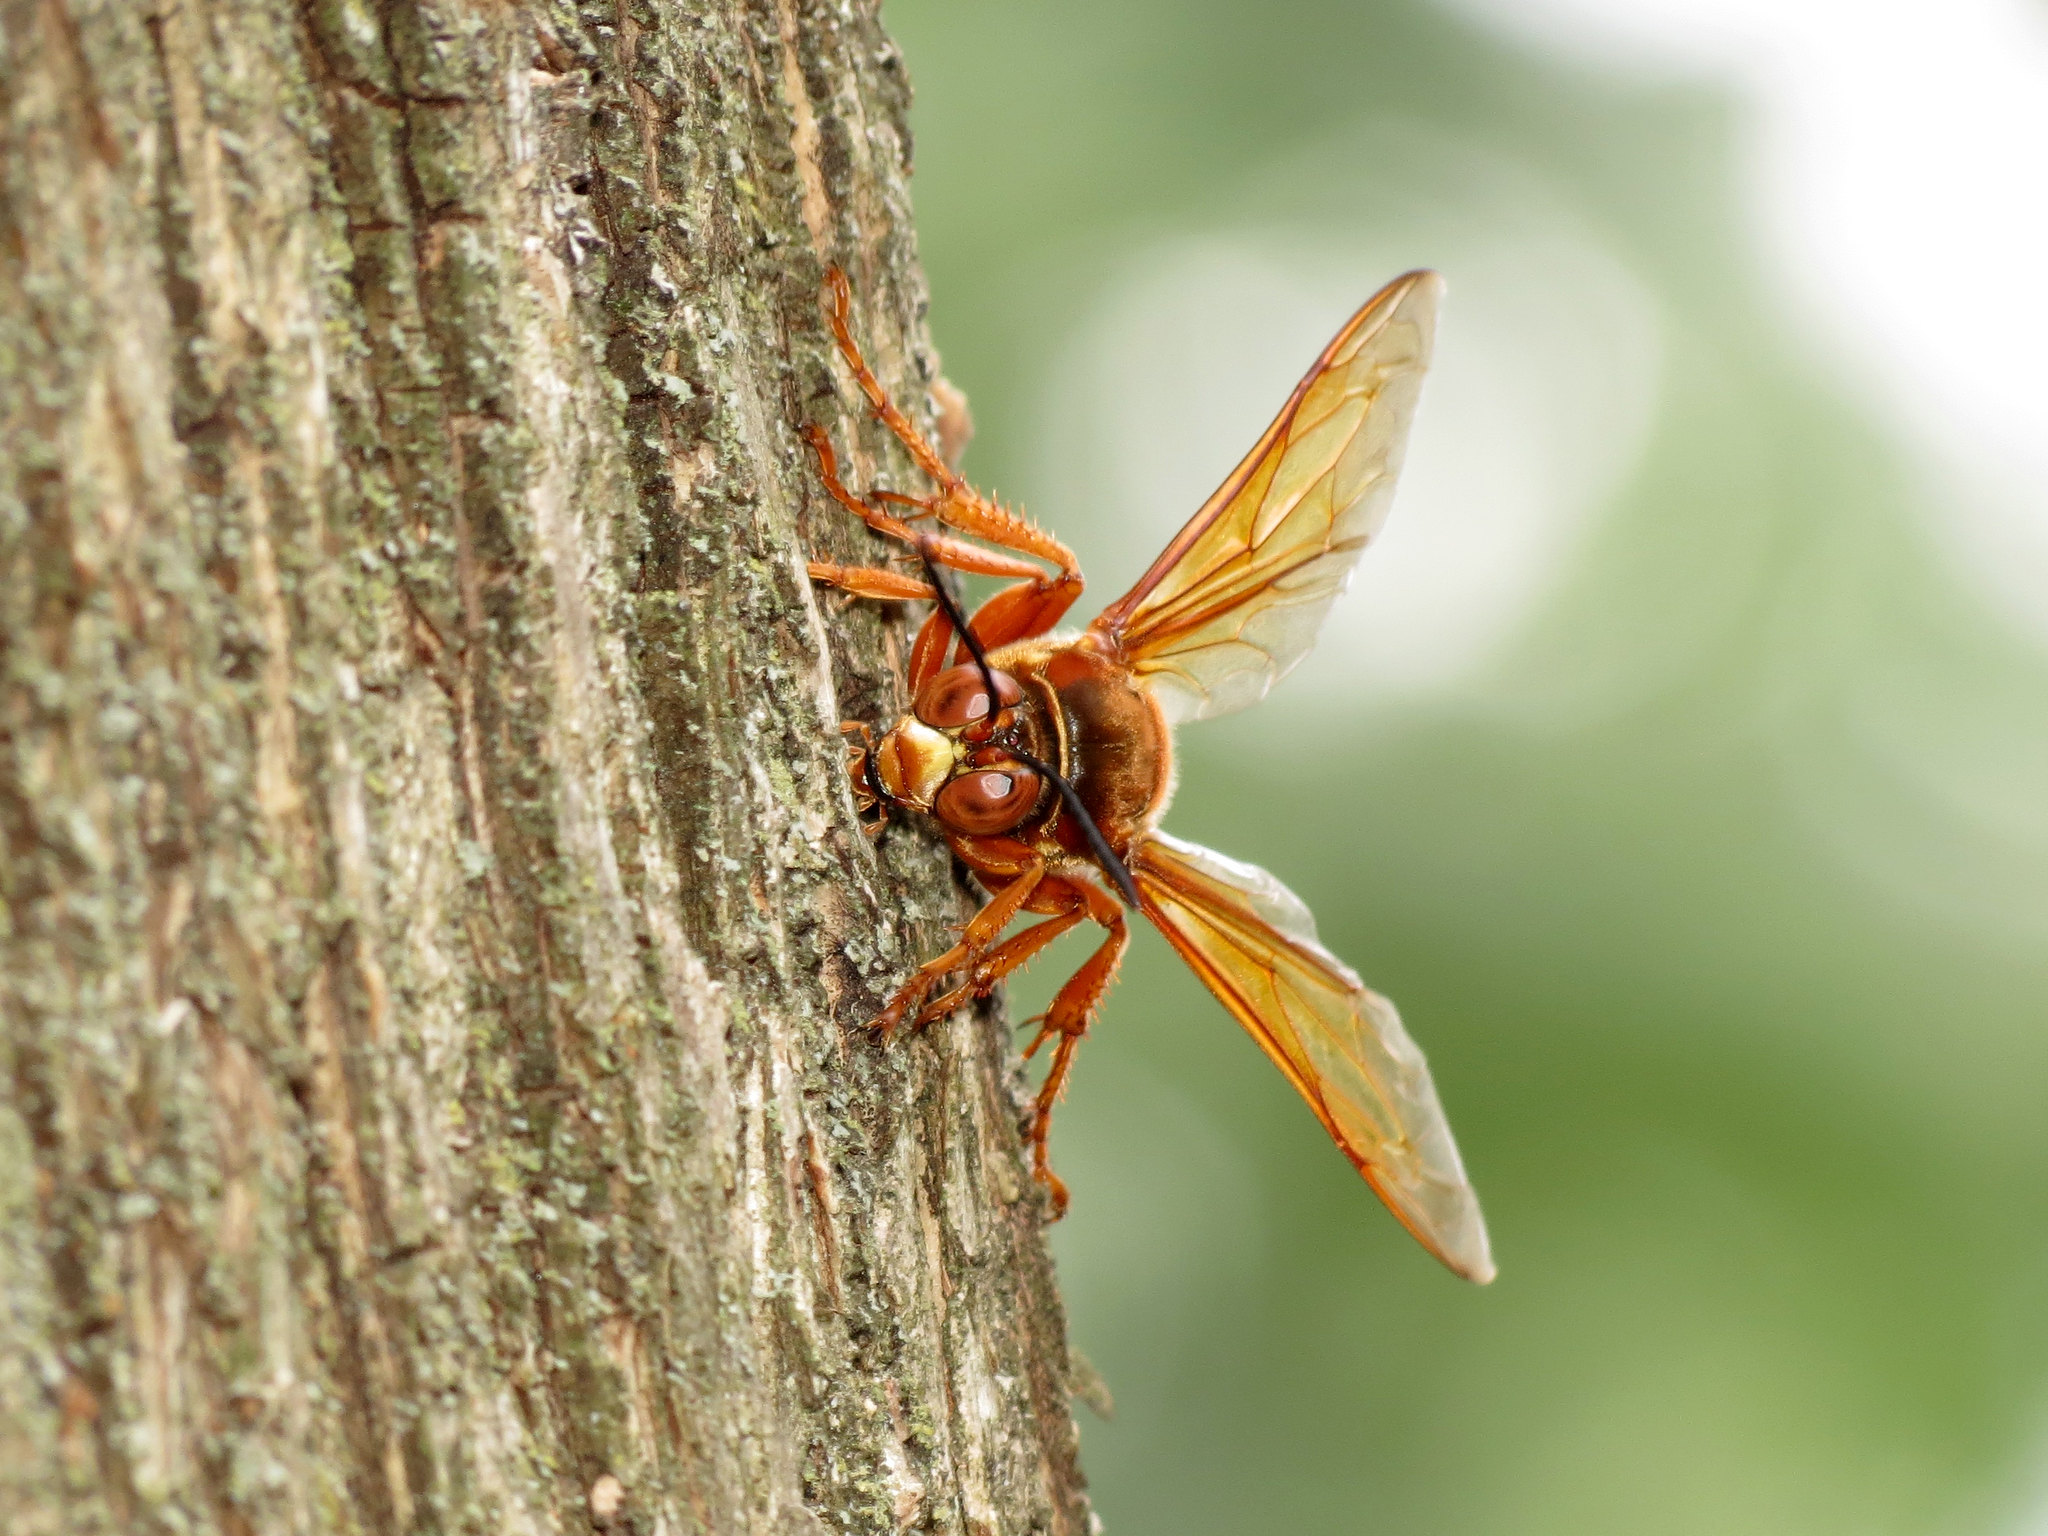 Sphecius speciosus, the cicada killer, feeding on tree sap.